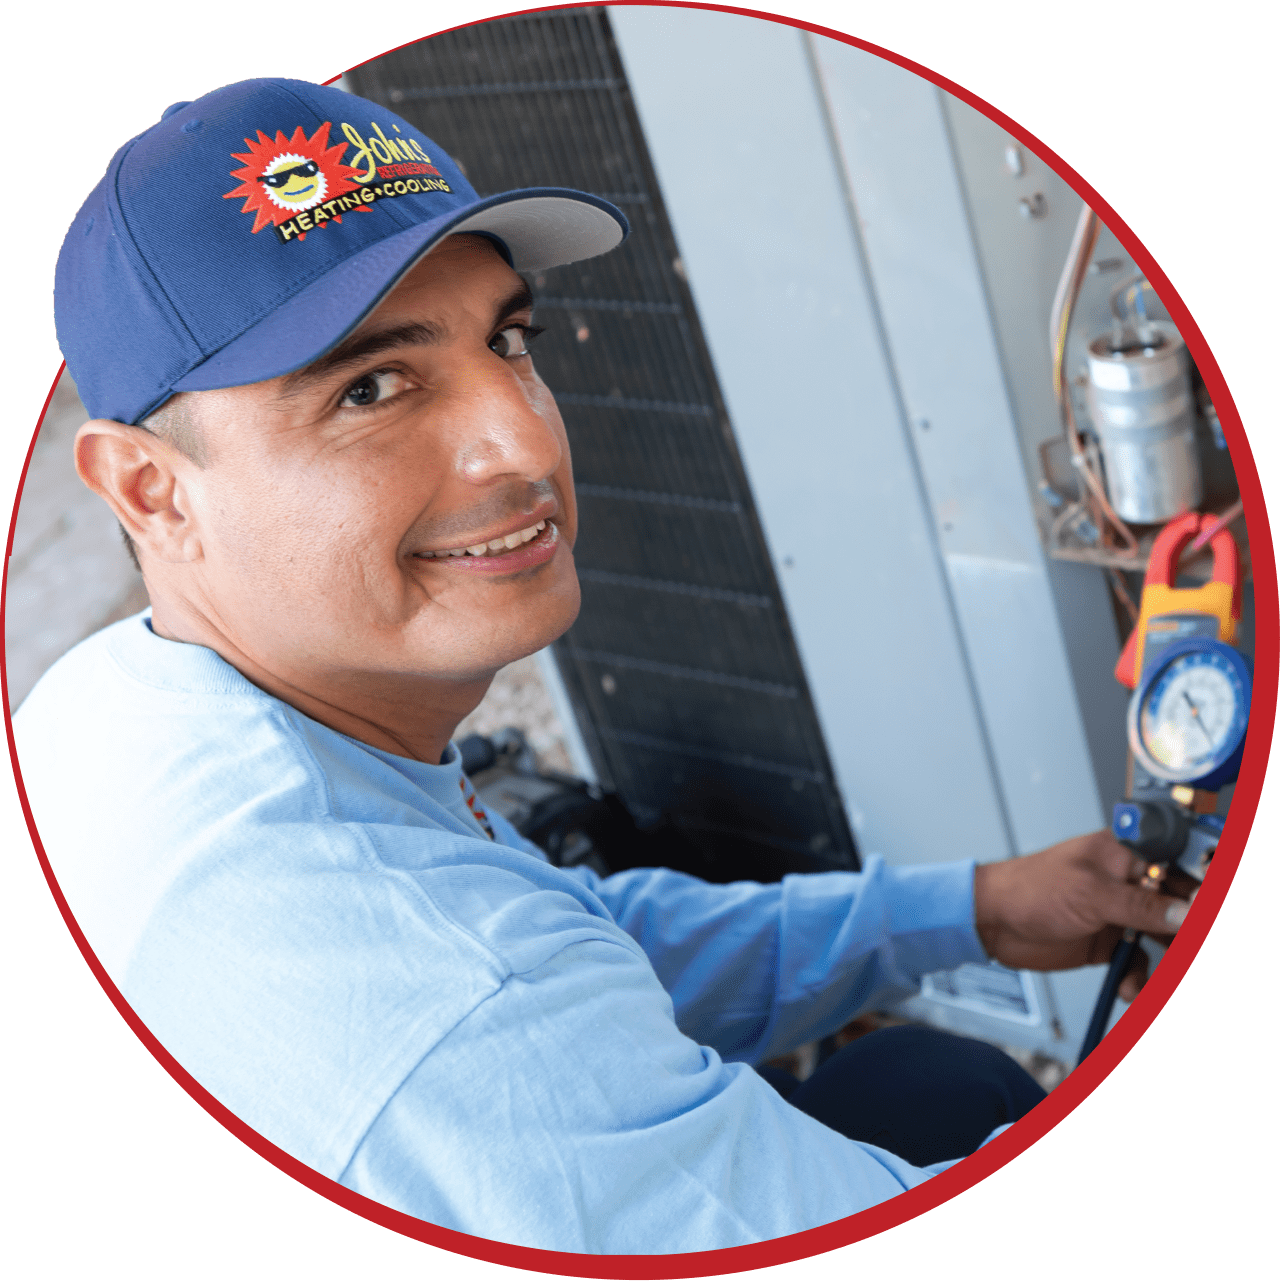 24/7 Heat Pump Repair Services in Mesa, Chandler and Gilbert